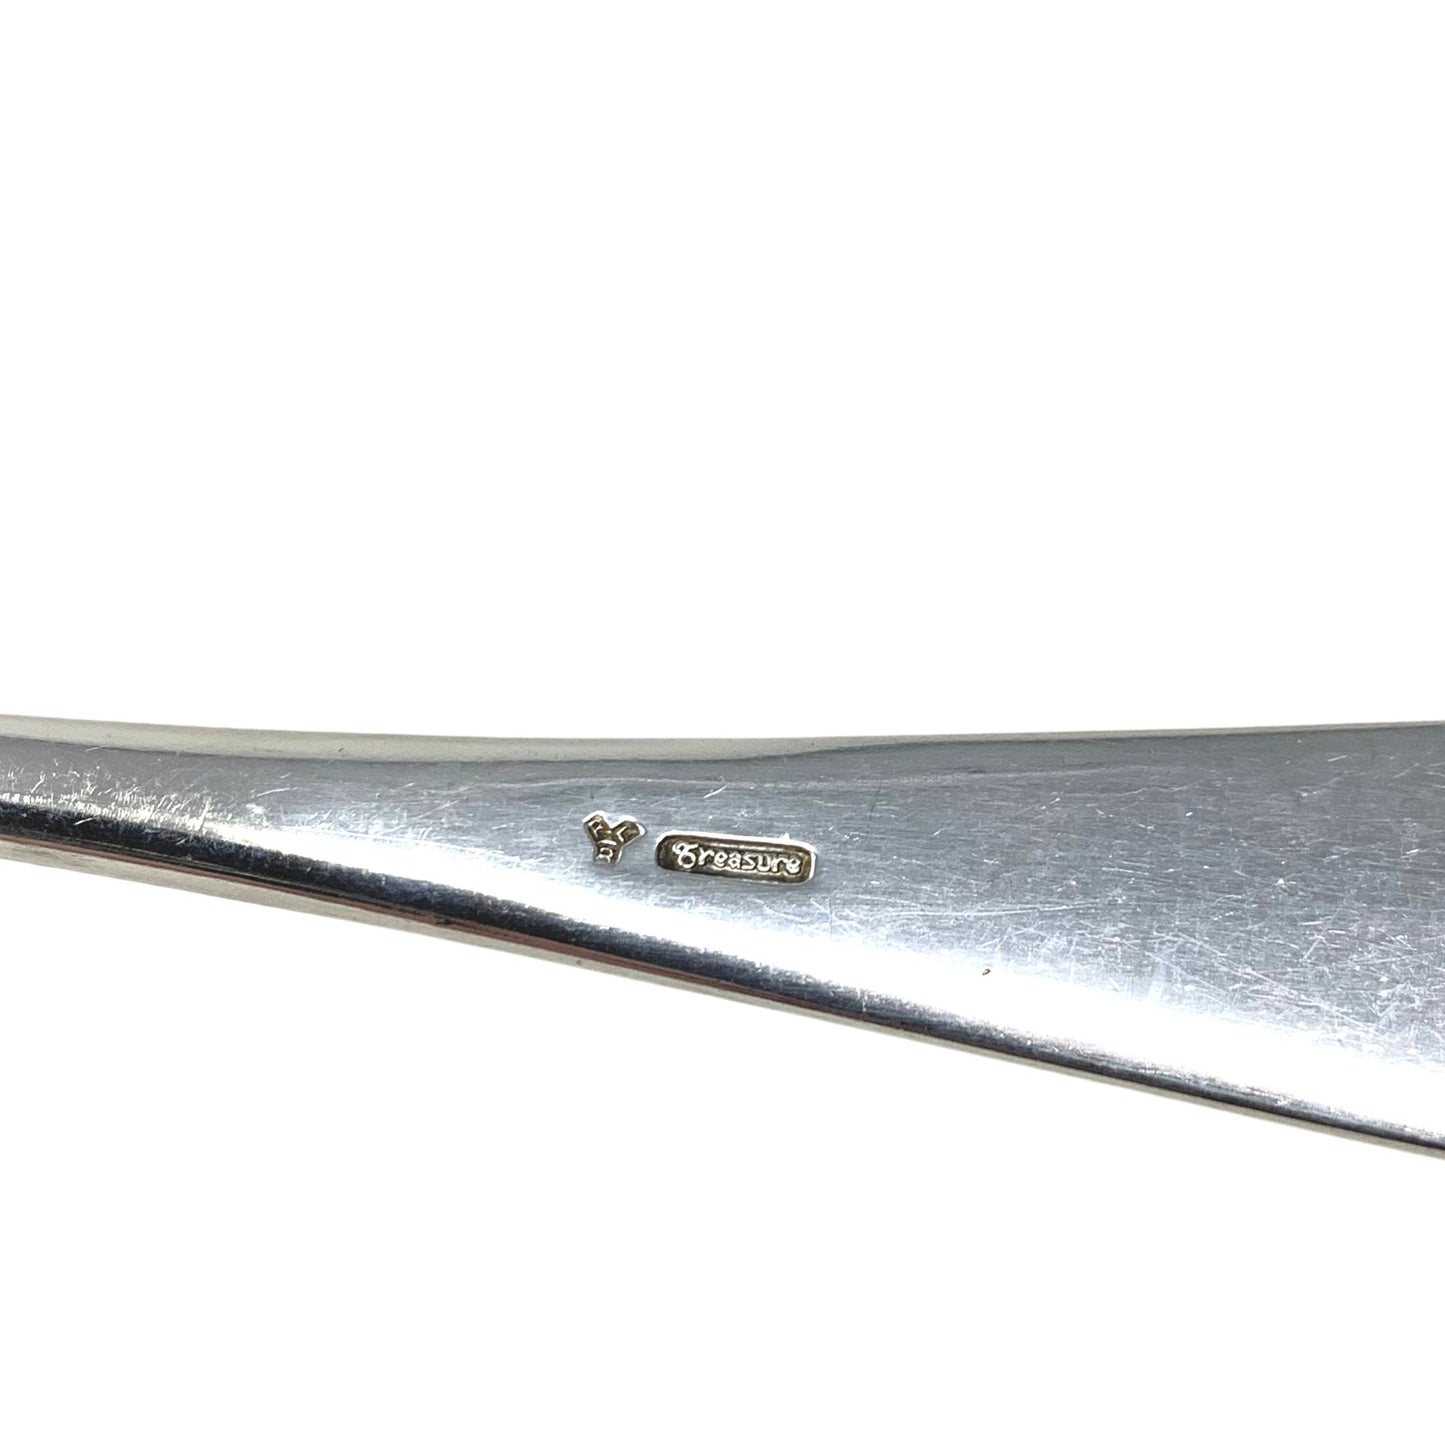 Lunt Early American Sterling Silver "C" Monogrammed Casserole Spoon